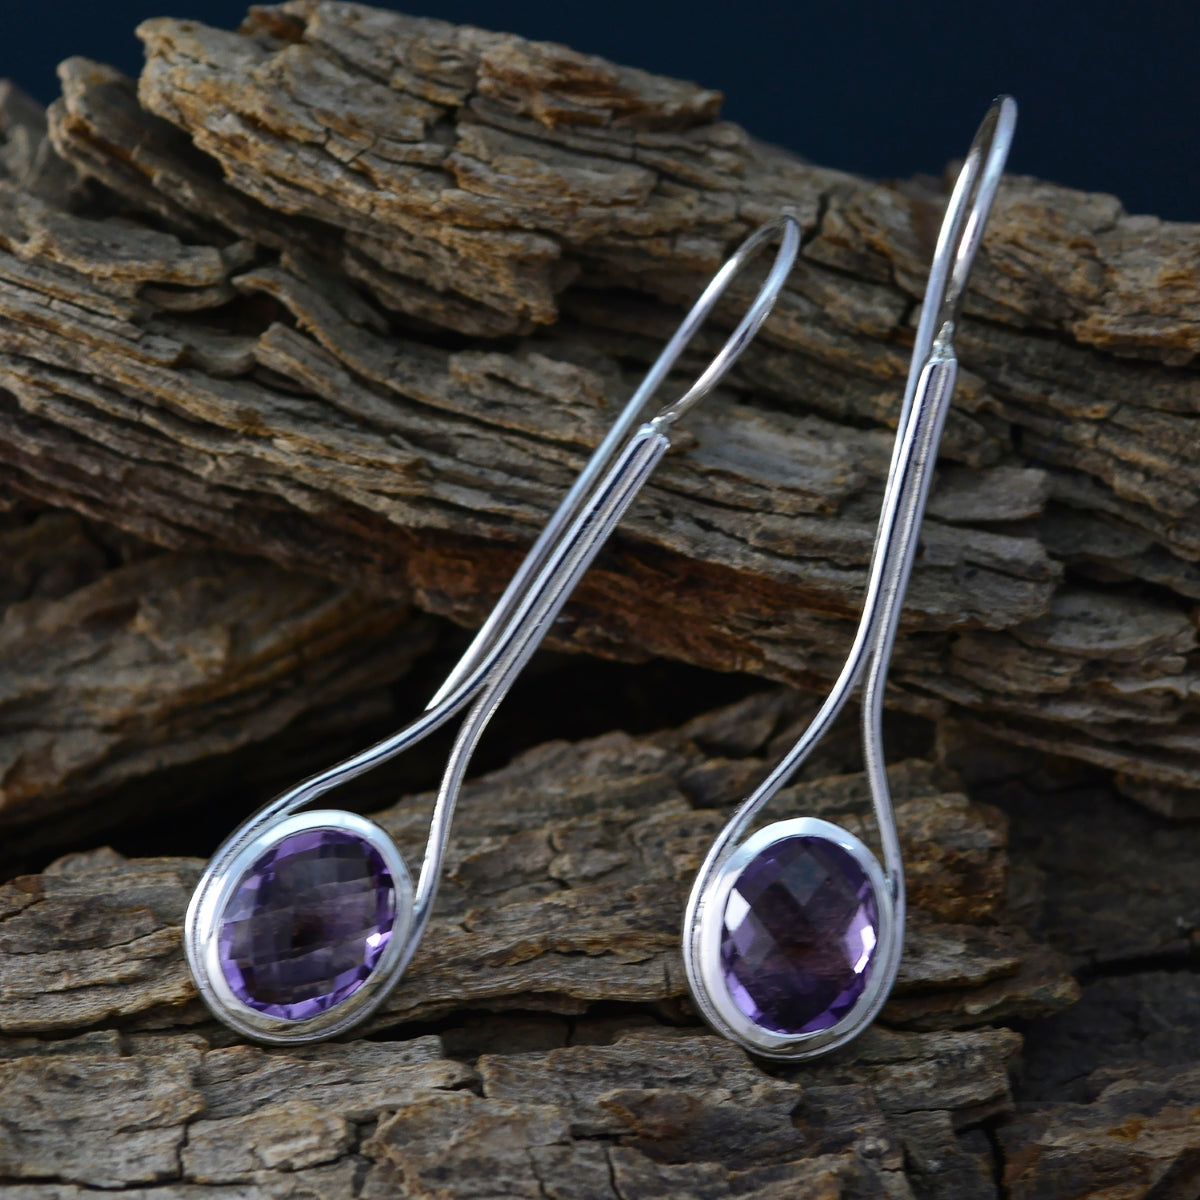 Riyo Genuine Gems round Checker Purple Amethyst Silver Earrings gift for st. patricks day